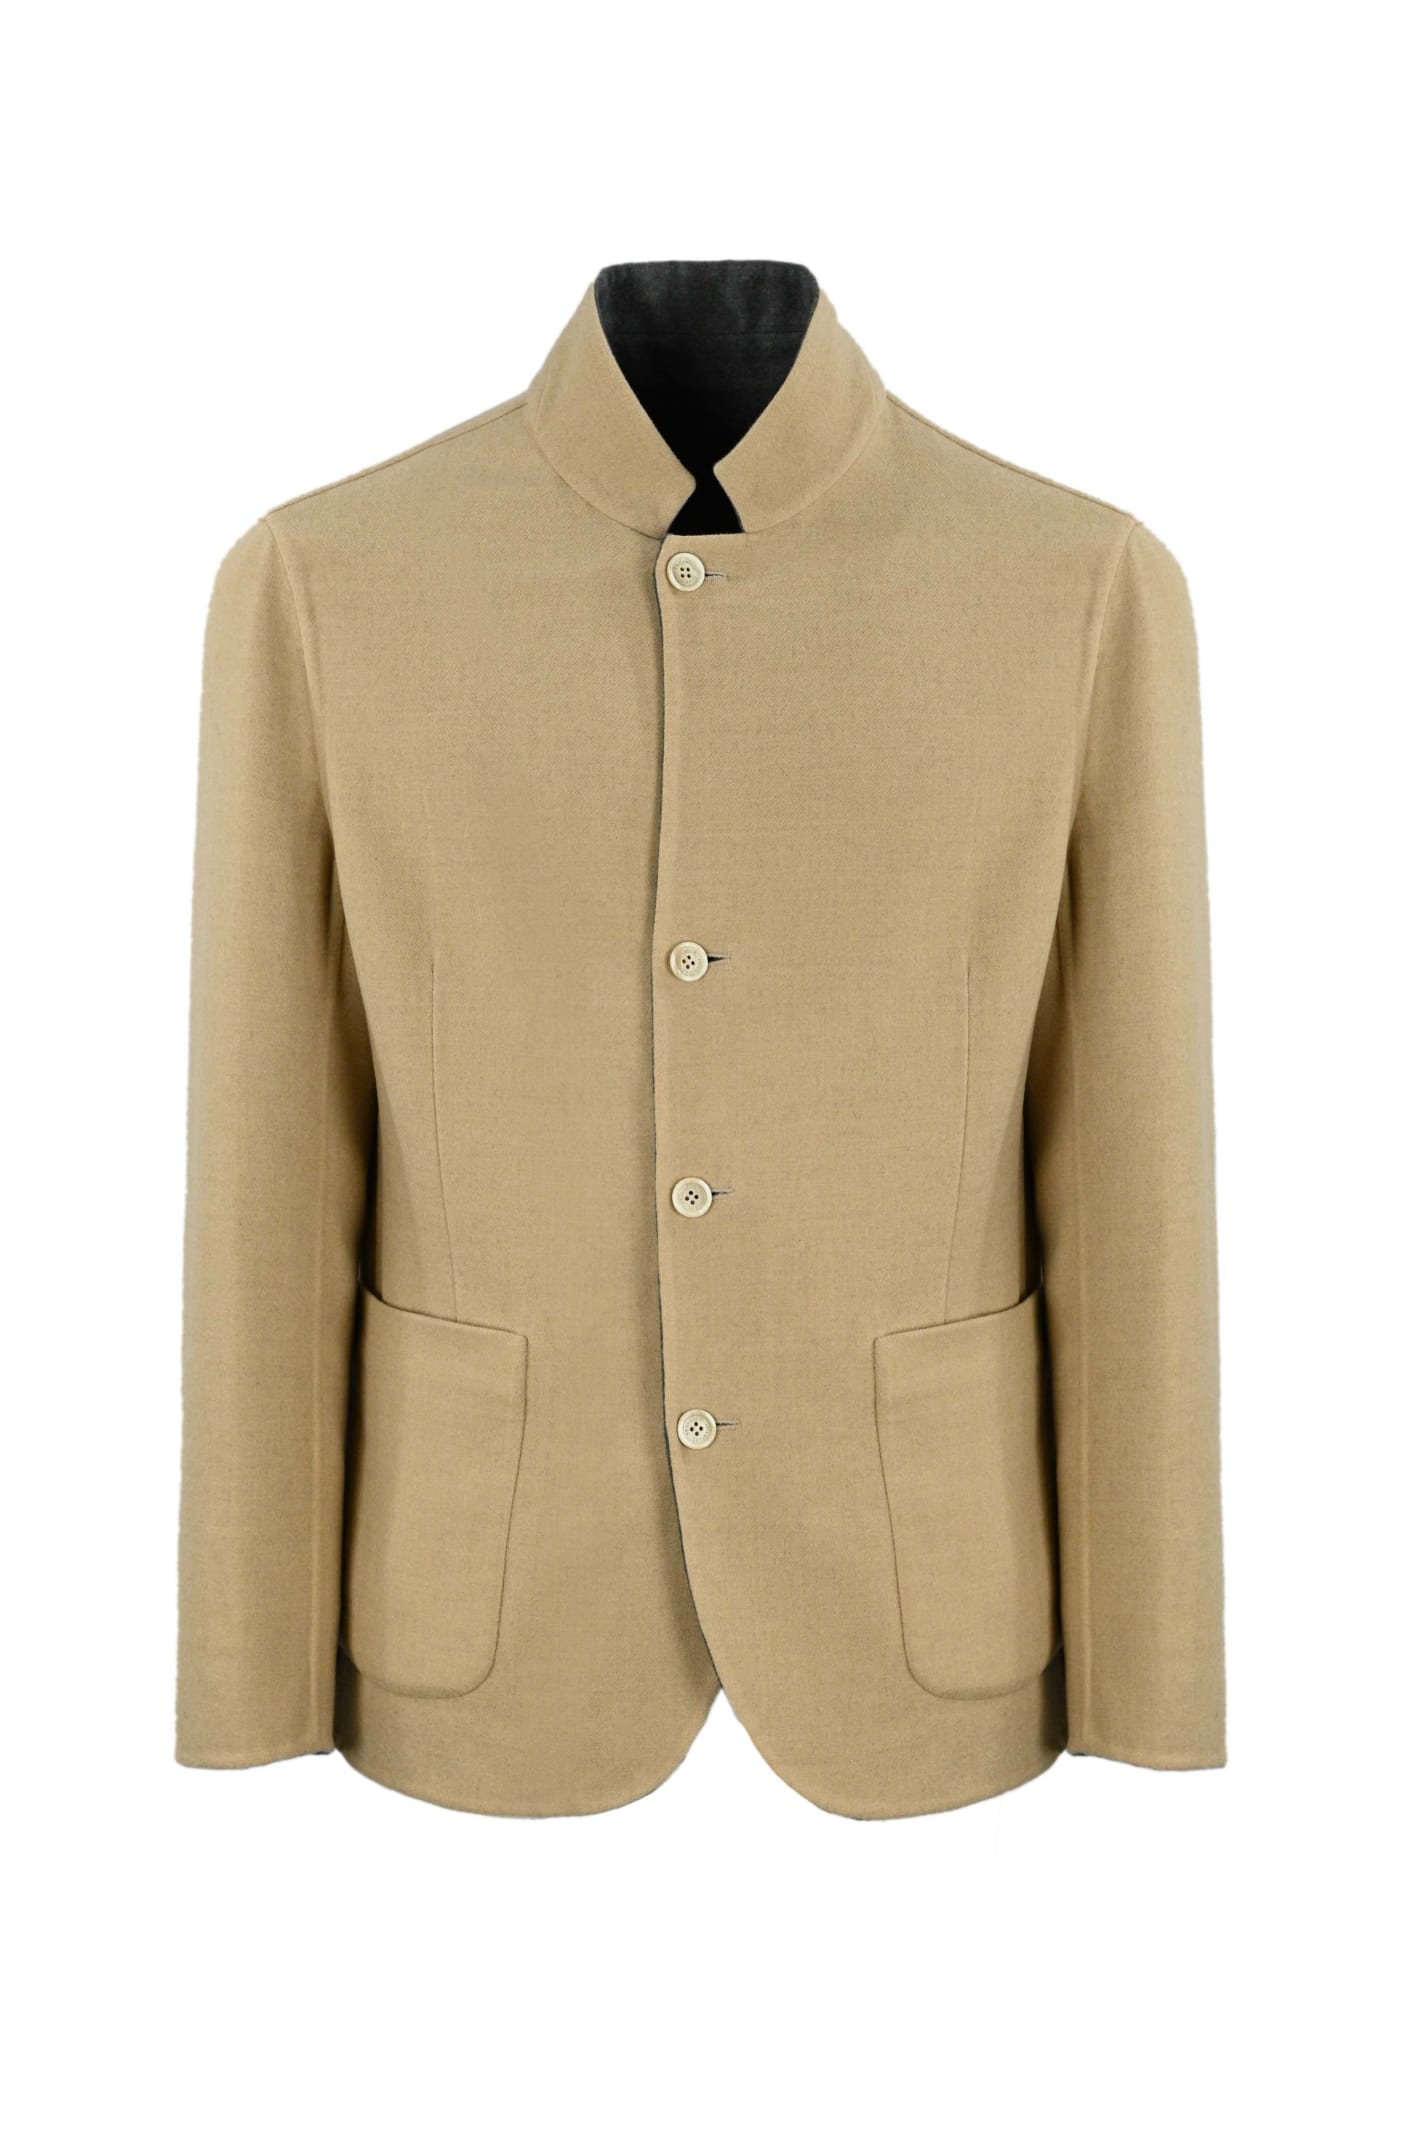 Brunello Cucinelli Reversible Wool Jacket